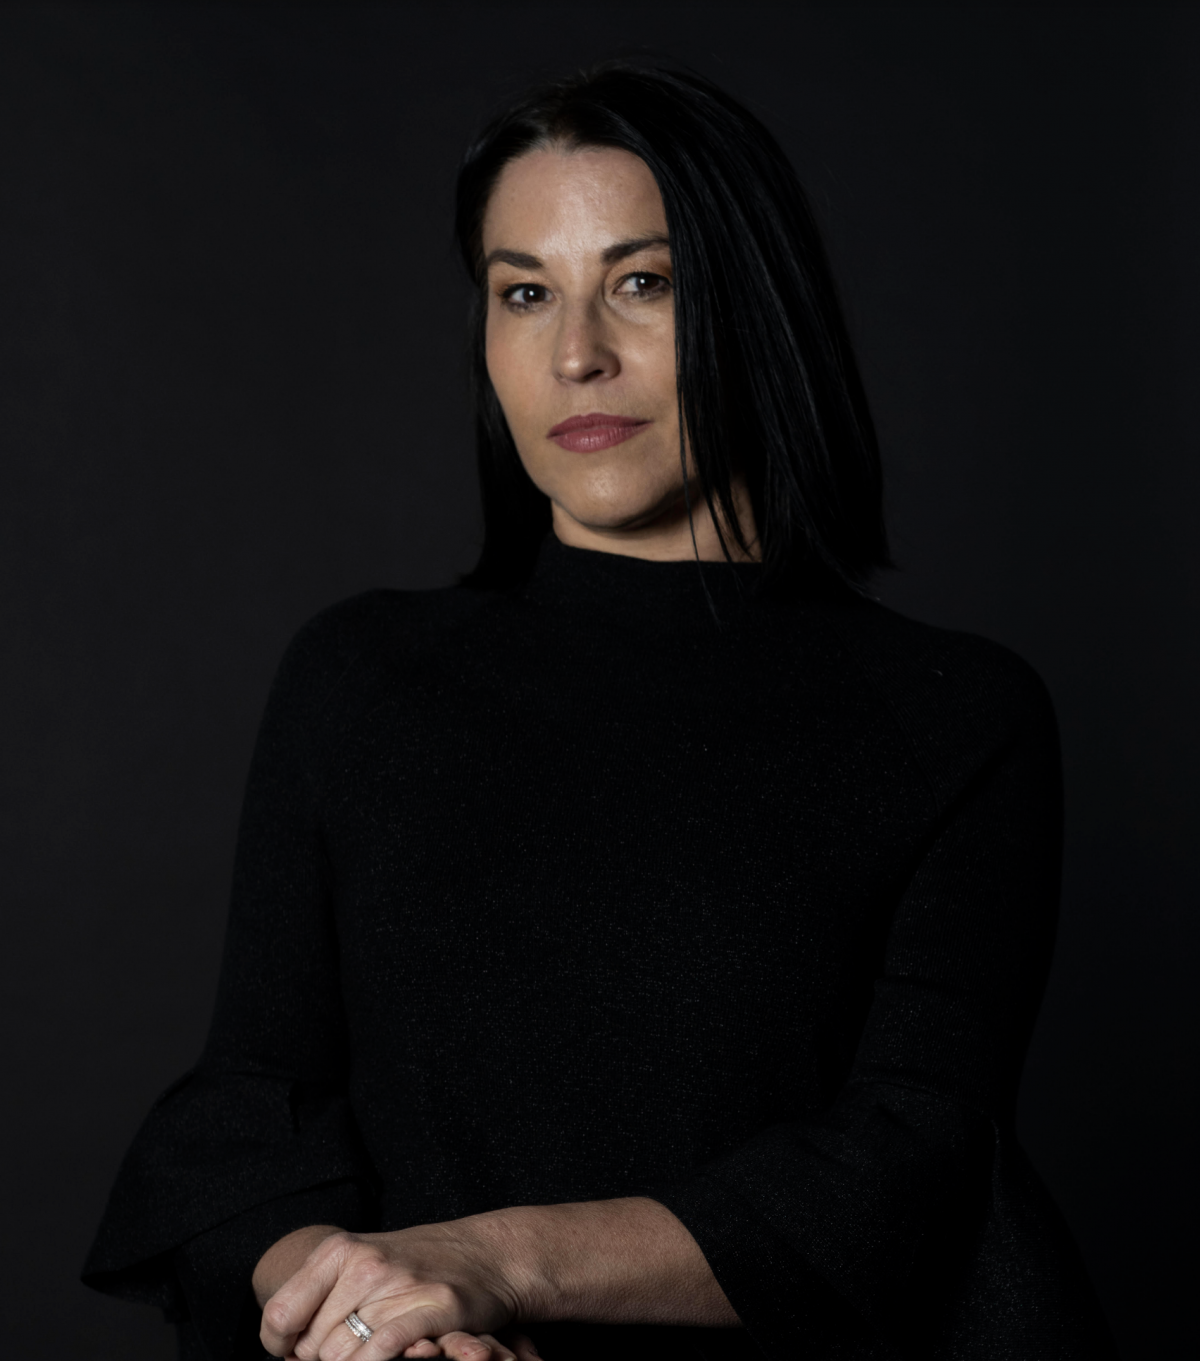 Headshot of Arlene Davila, wearing black and dark gray background